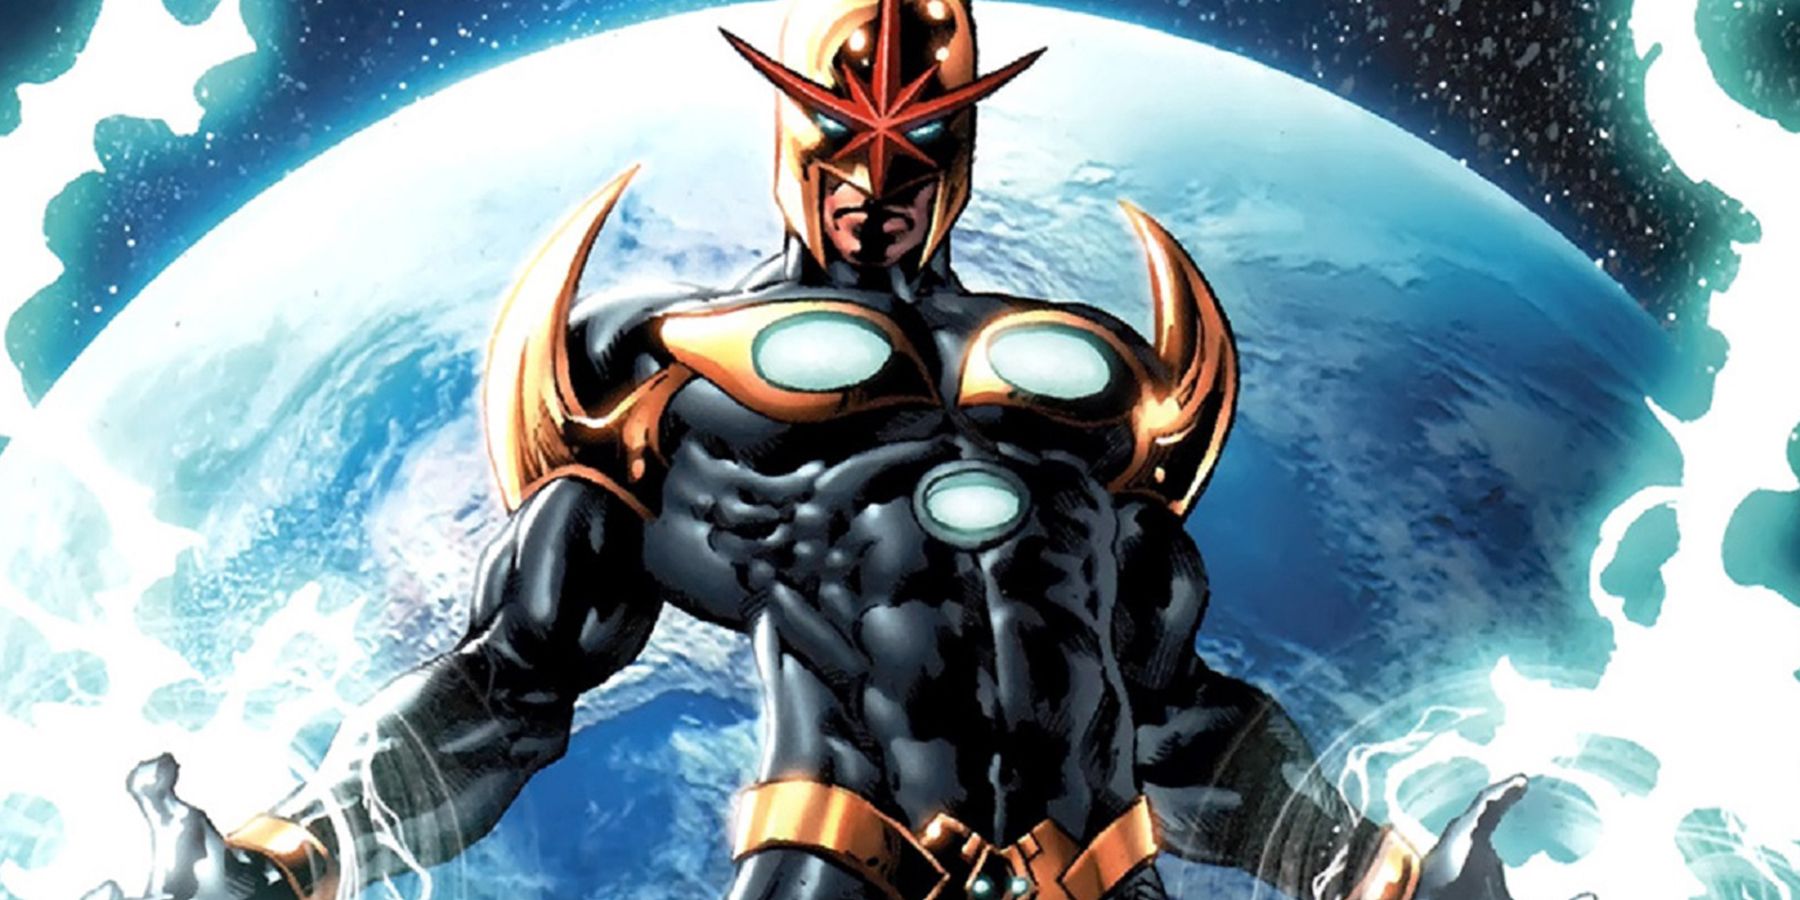 Nova using his powers above Earth